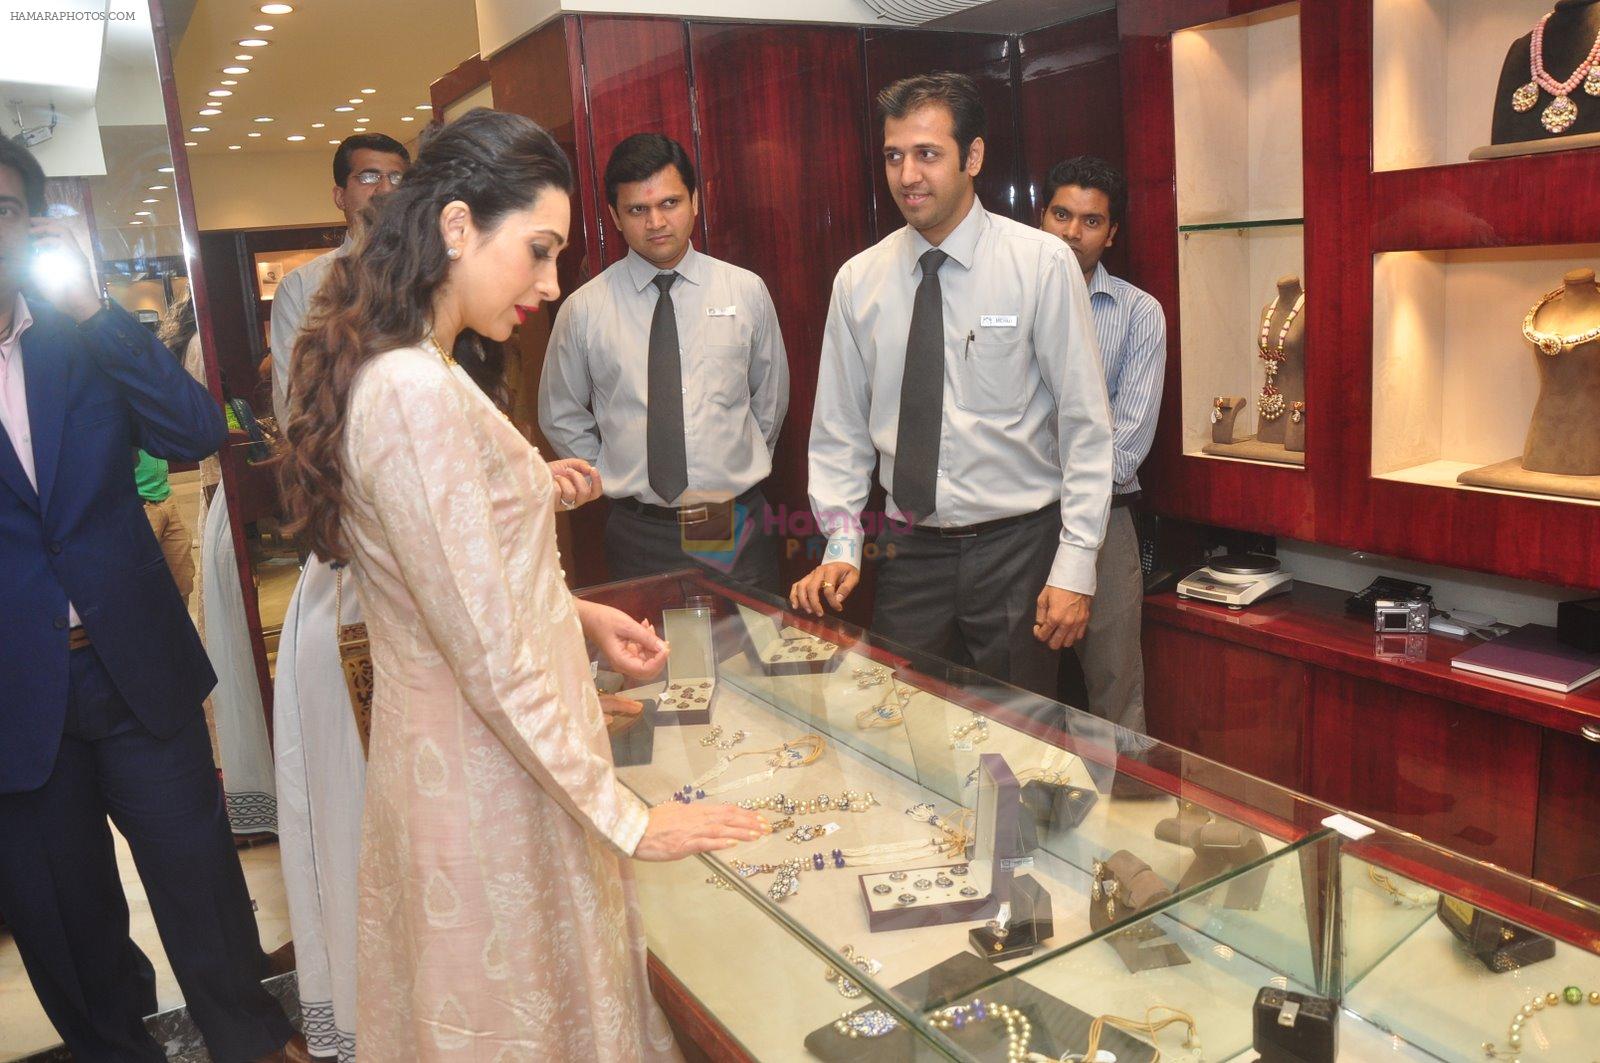 Karisma Kapoor at Notandas store in bandra, Mumbai on 27th Nov 2014